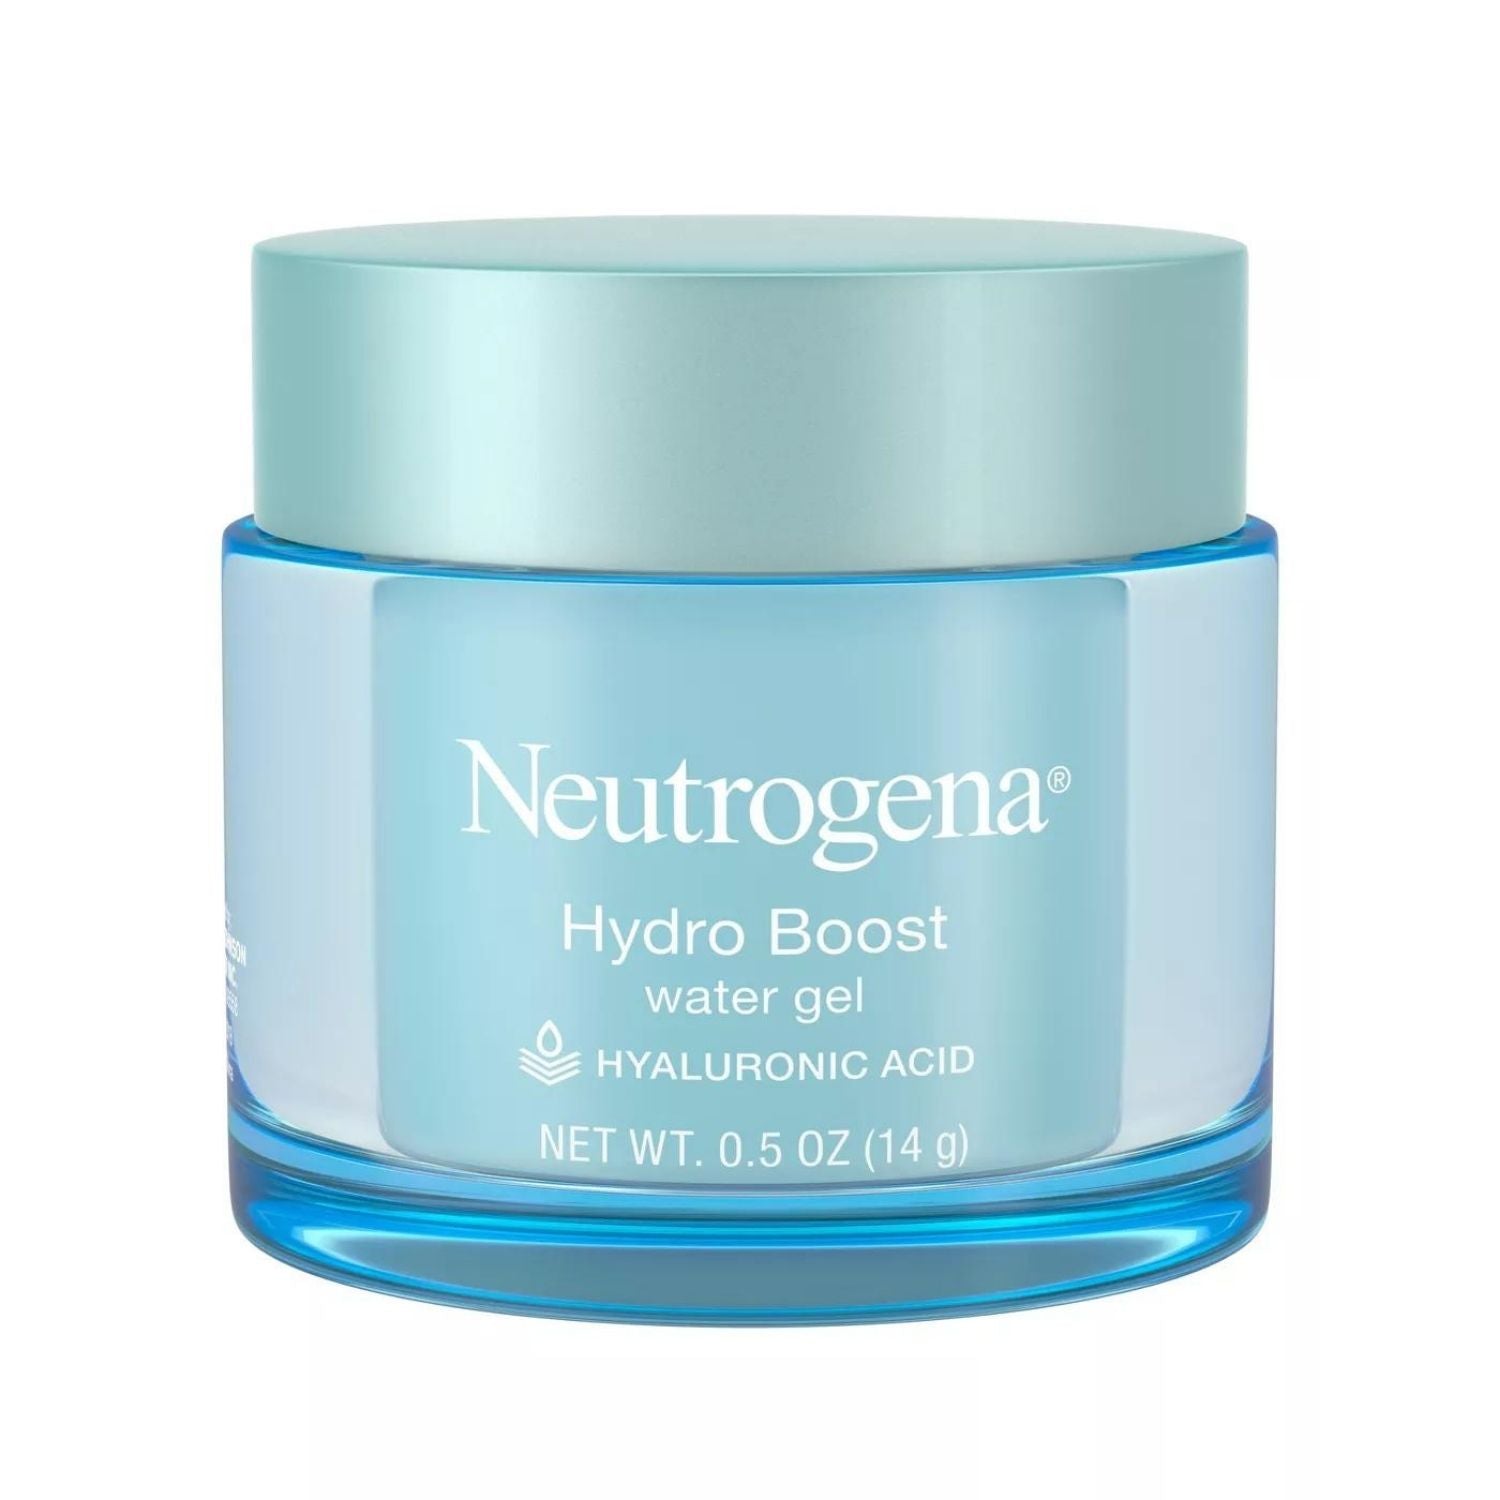 Neutrogena Hydro Boost Hydrating Water Gel Face Moisturizer - 0.5oz Trial Size